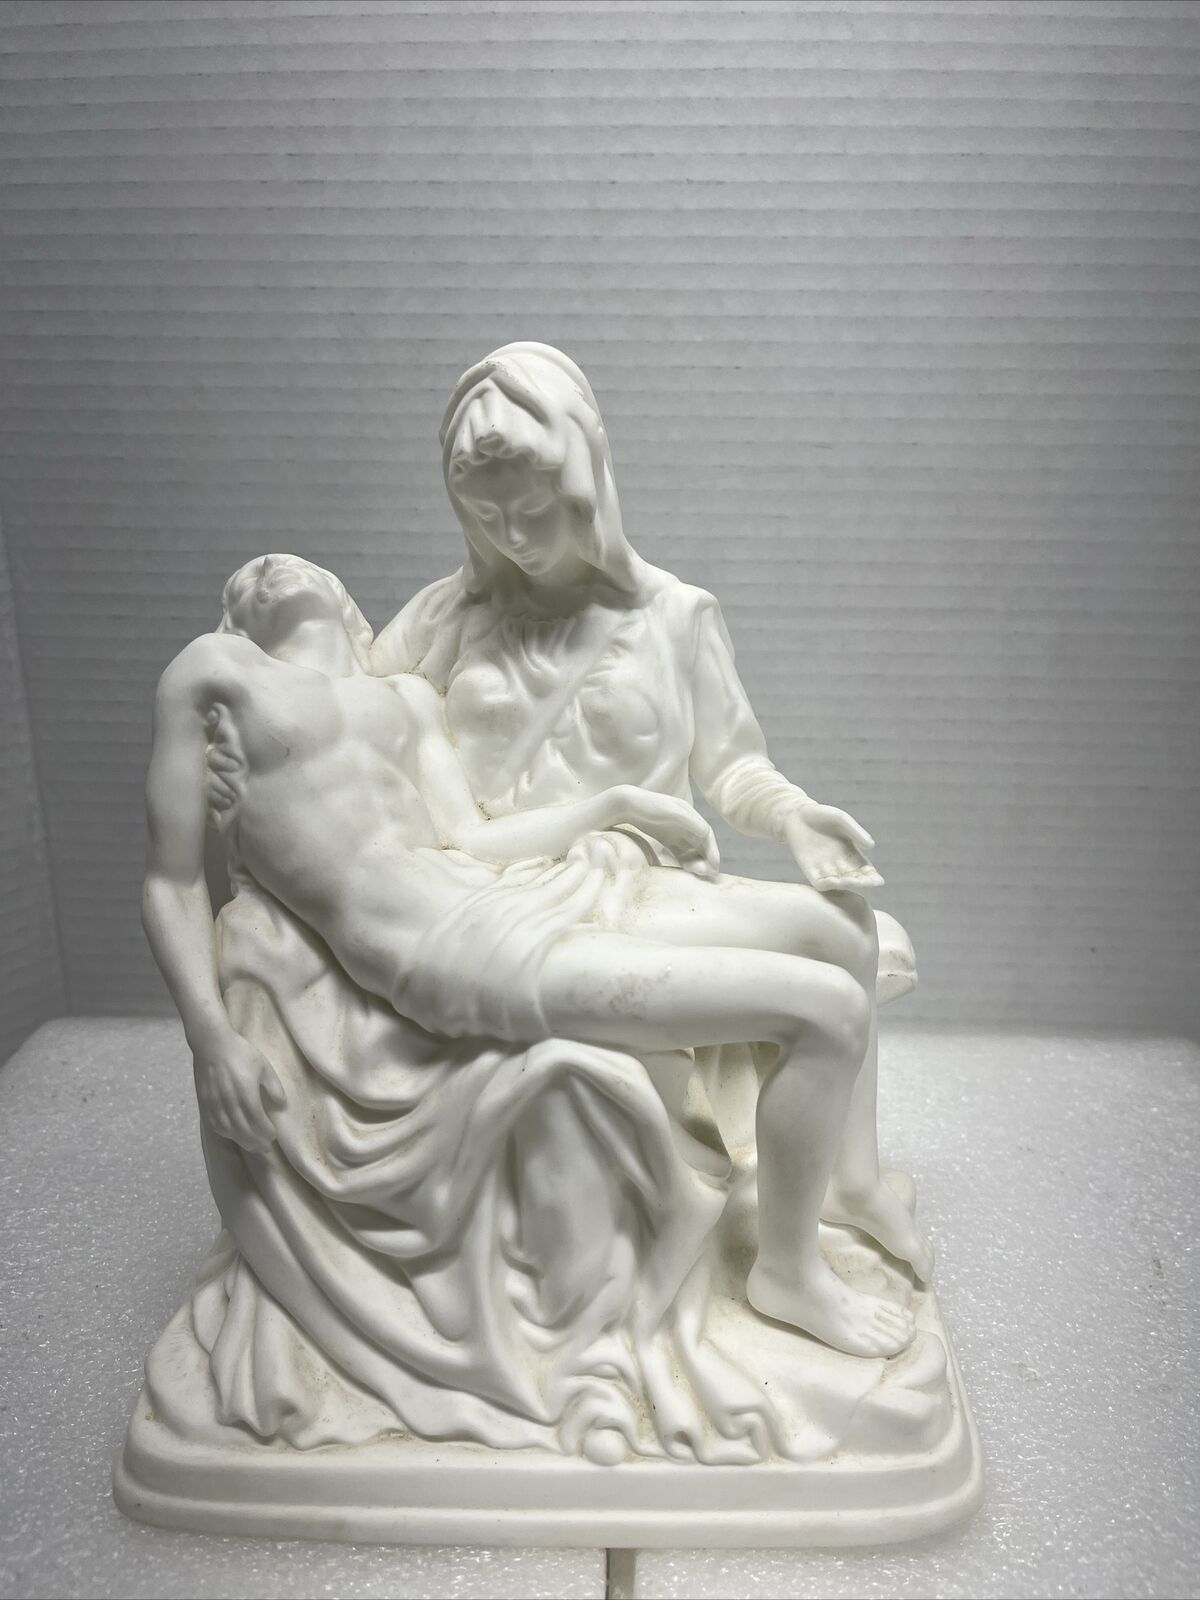 1993 LENOX PIETA FINE BONE CHINA FIGURINE MOTHER MARY AND JESUS LIMITED EDITION